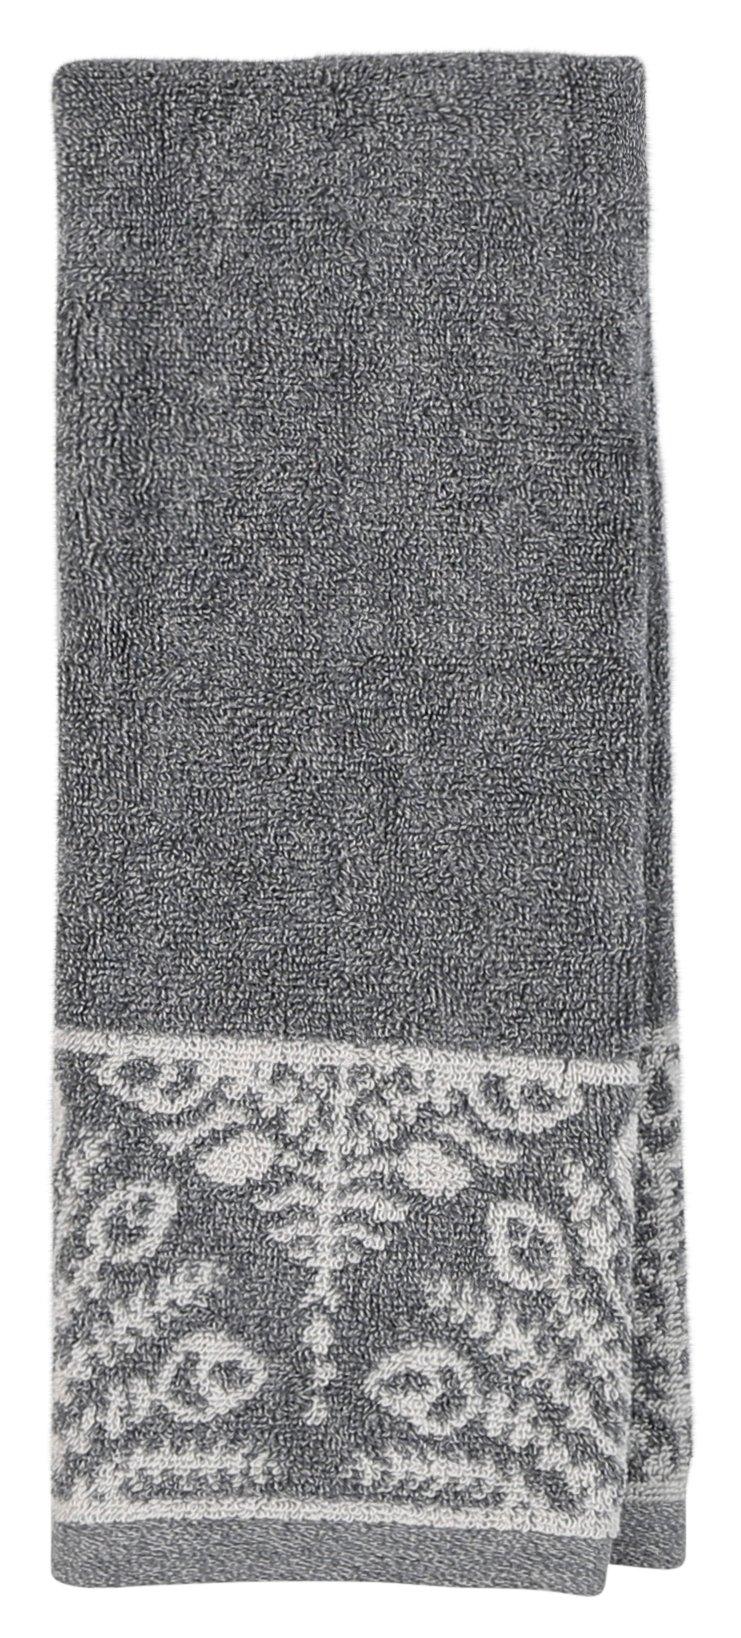 30x56 Decorative Bath Towel